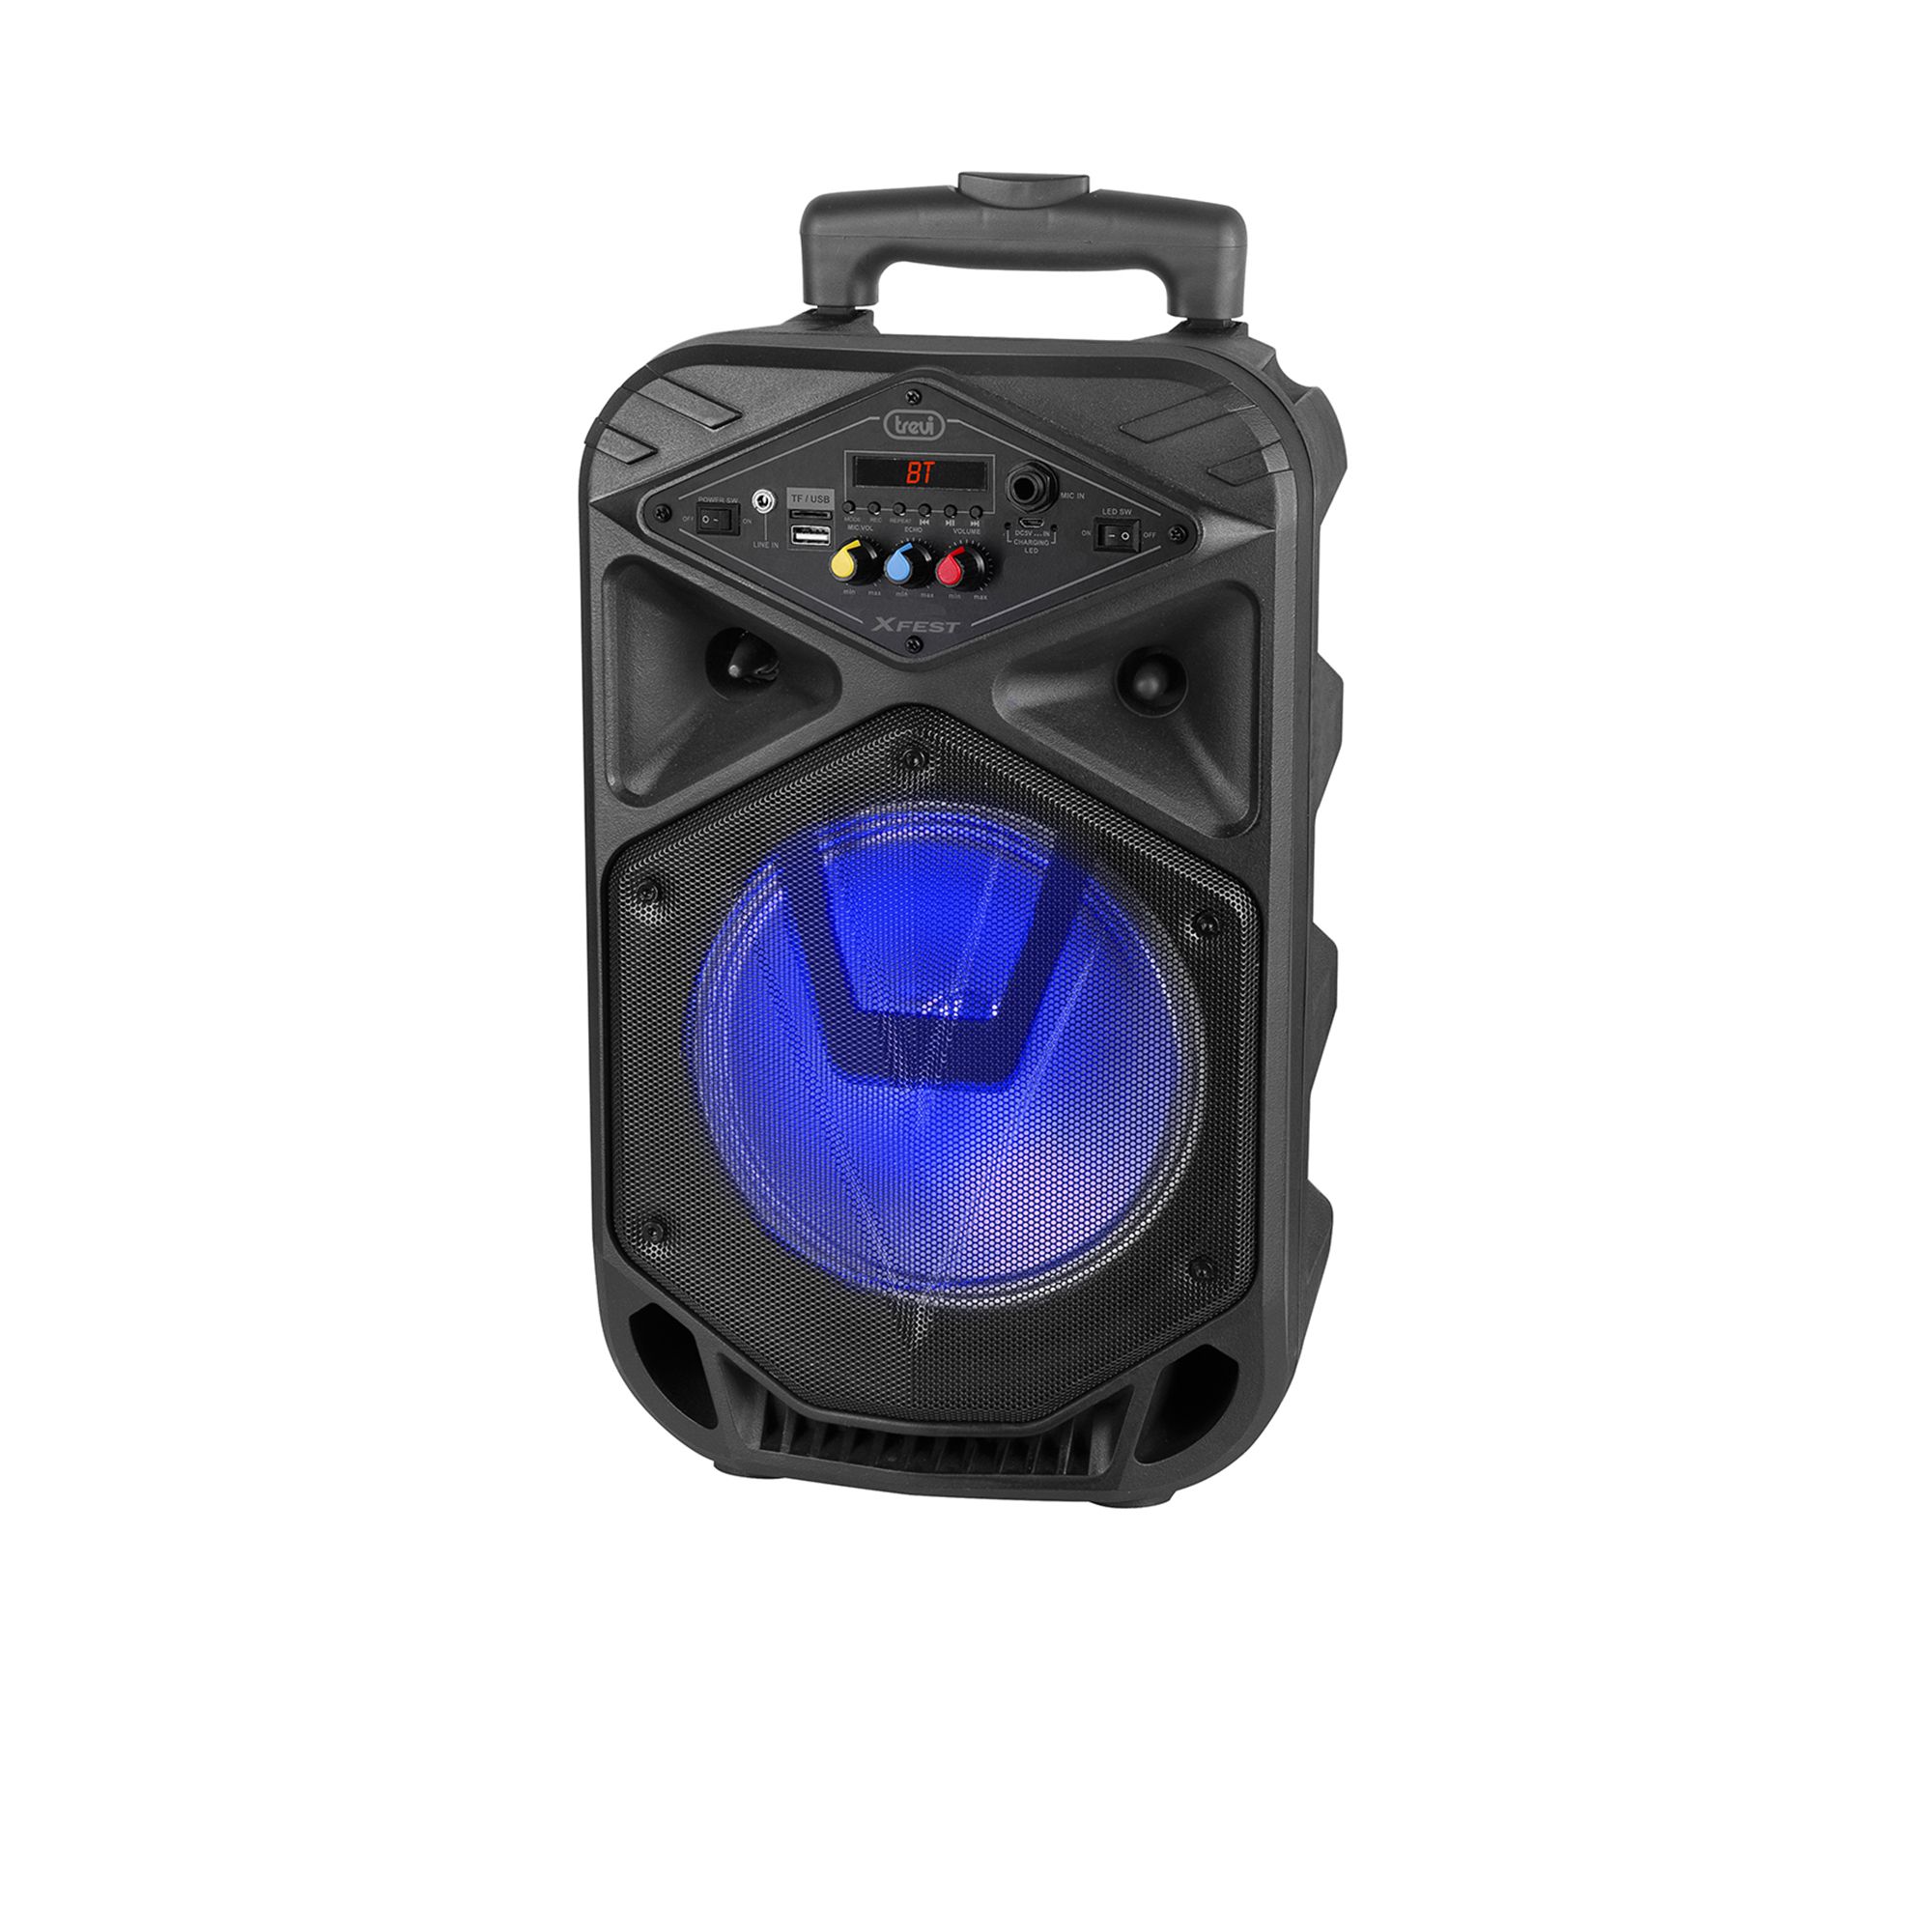 XF 350 Speaker portatile trolley con Bluetooth